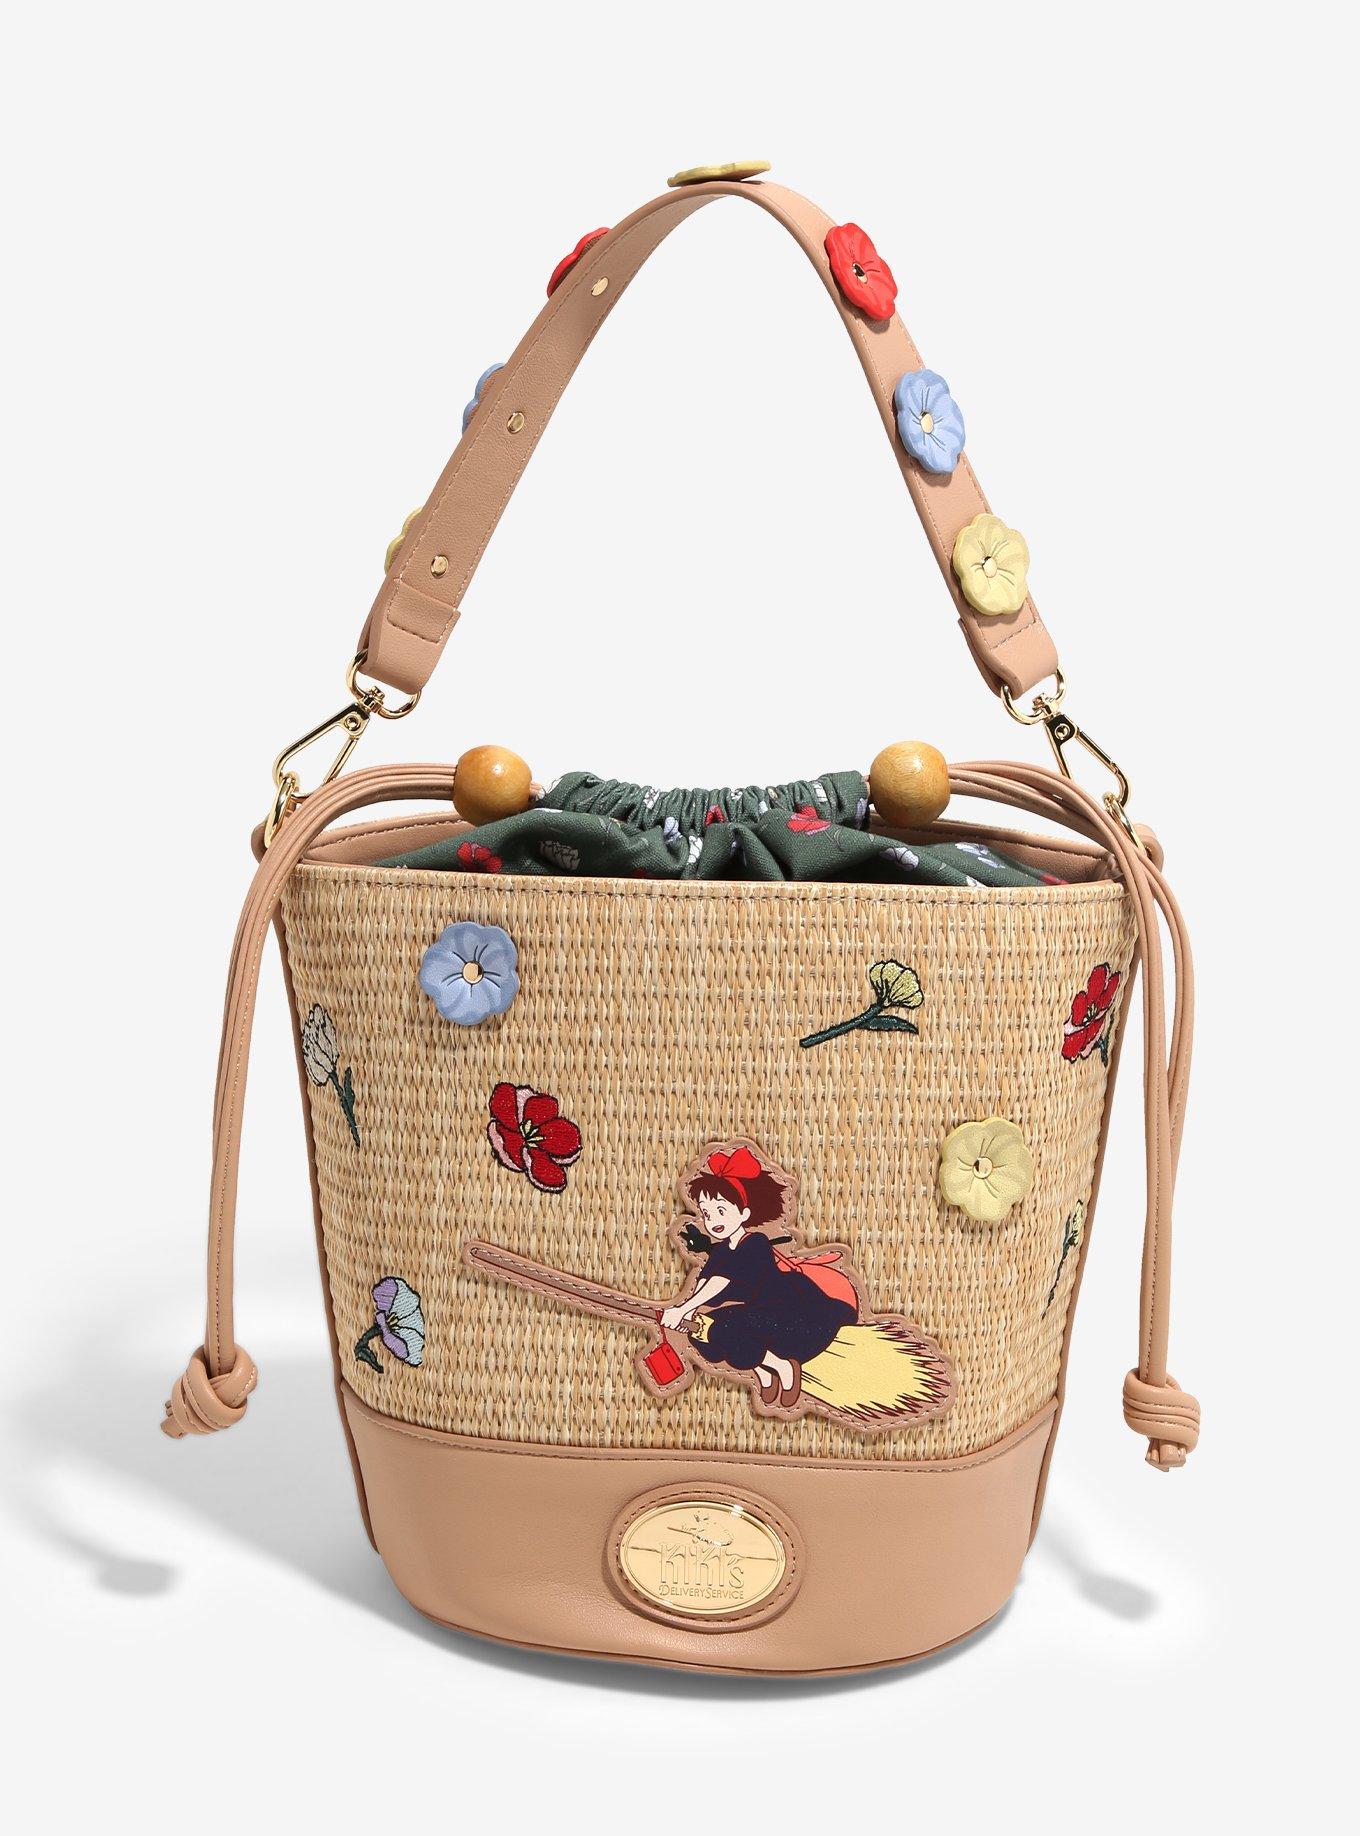 Our Universe Studio Ghibli Kiki's Delivery Service Basket Crossbody Bag